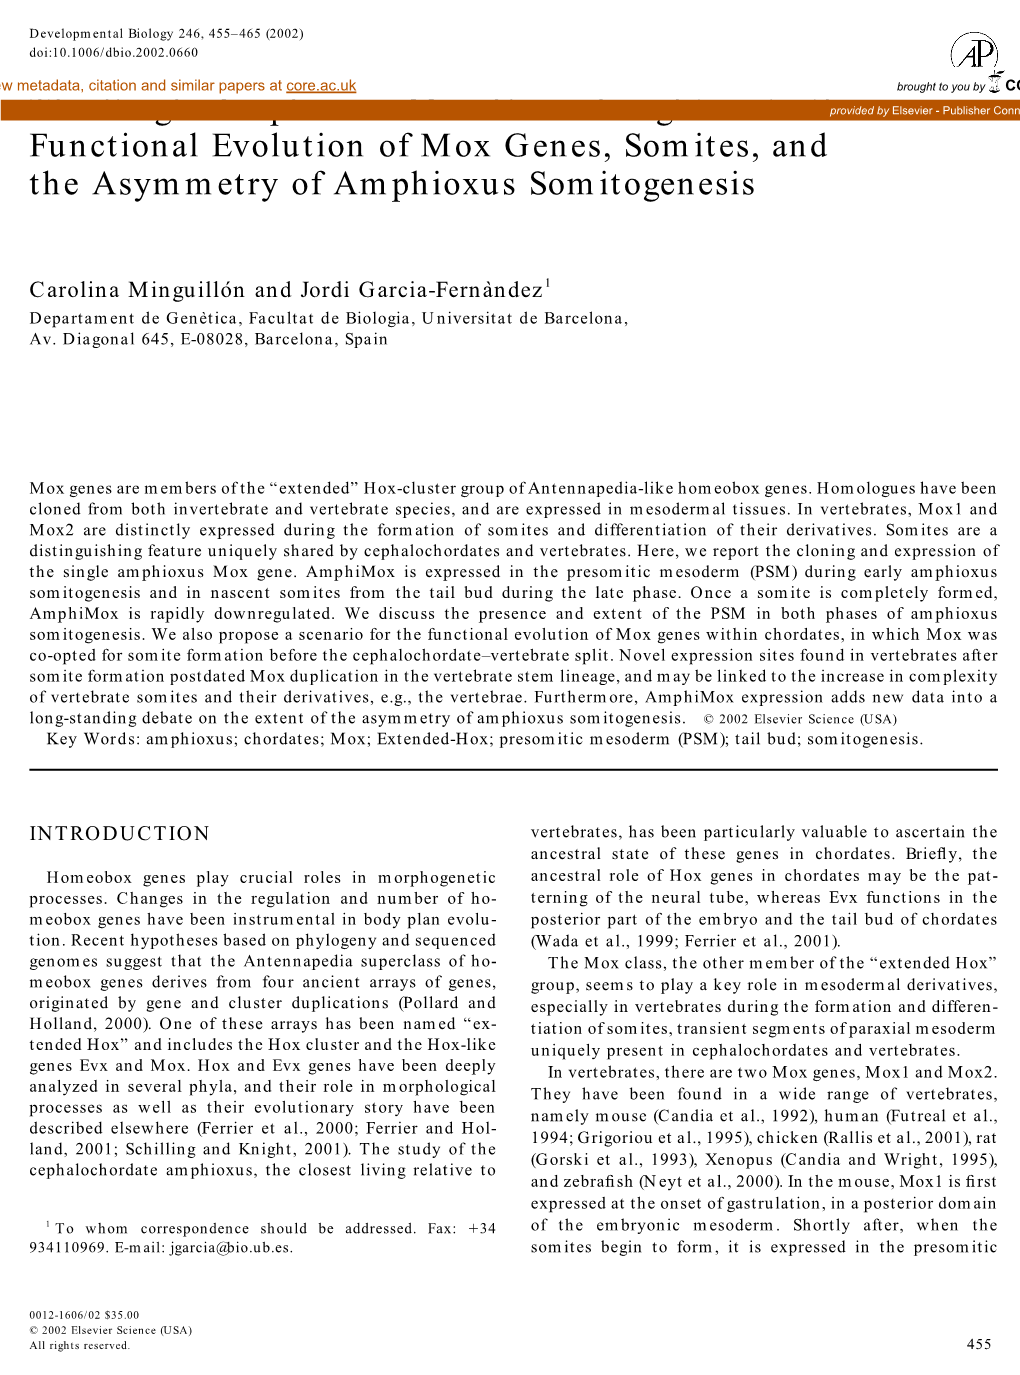 The Single Amphioxus Mox Gene